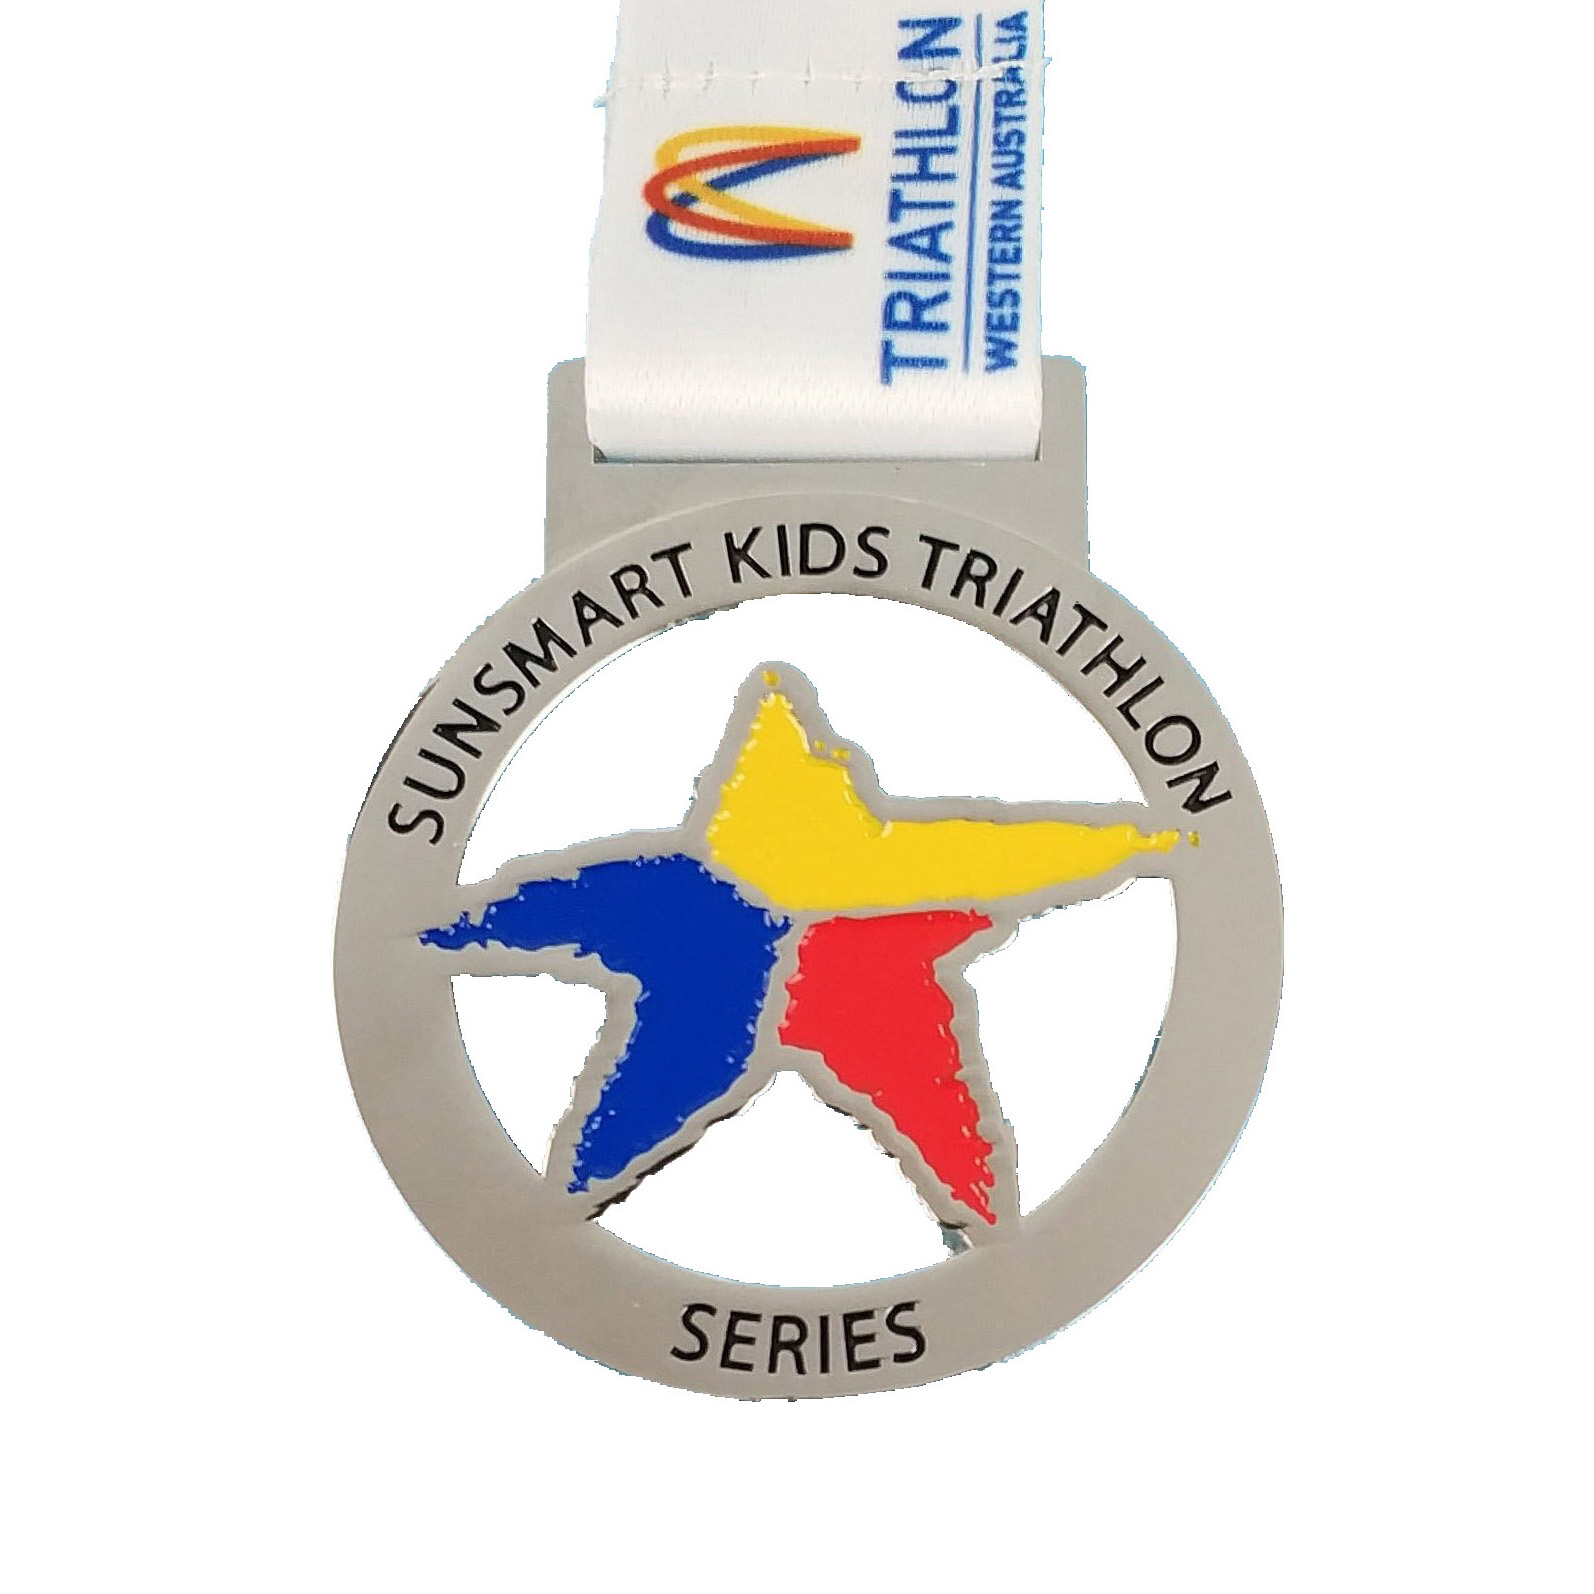 Serie Medaille fir Kanner Triathlon